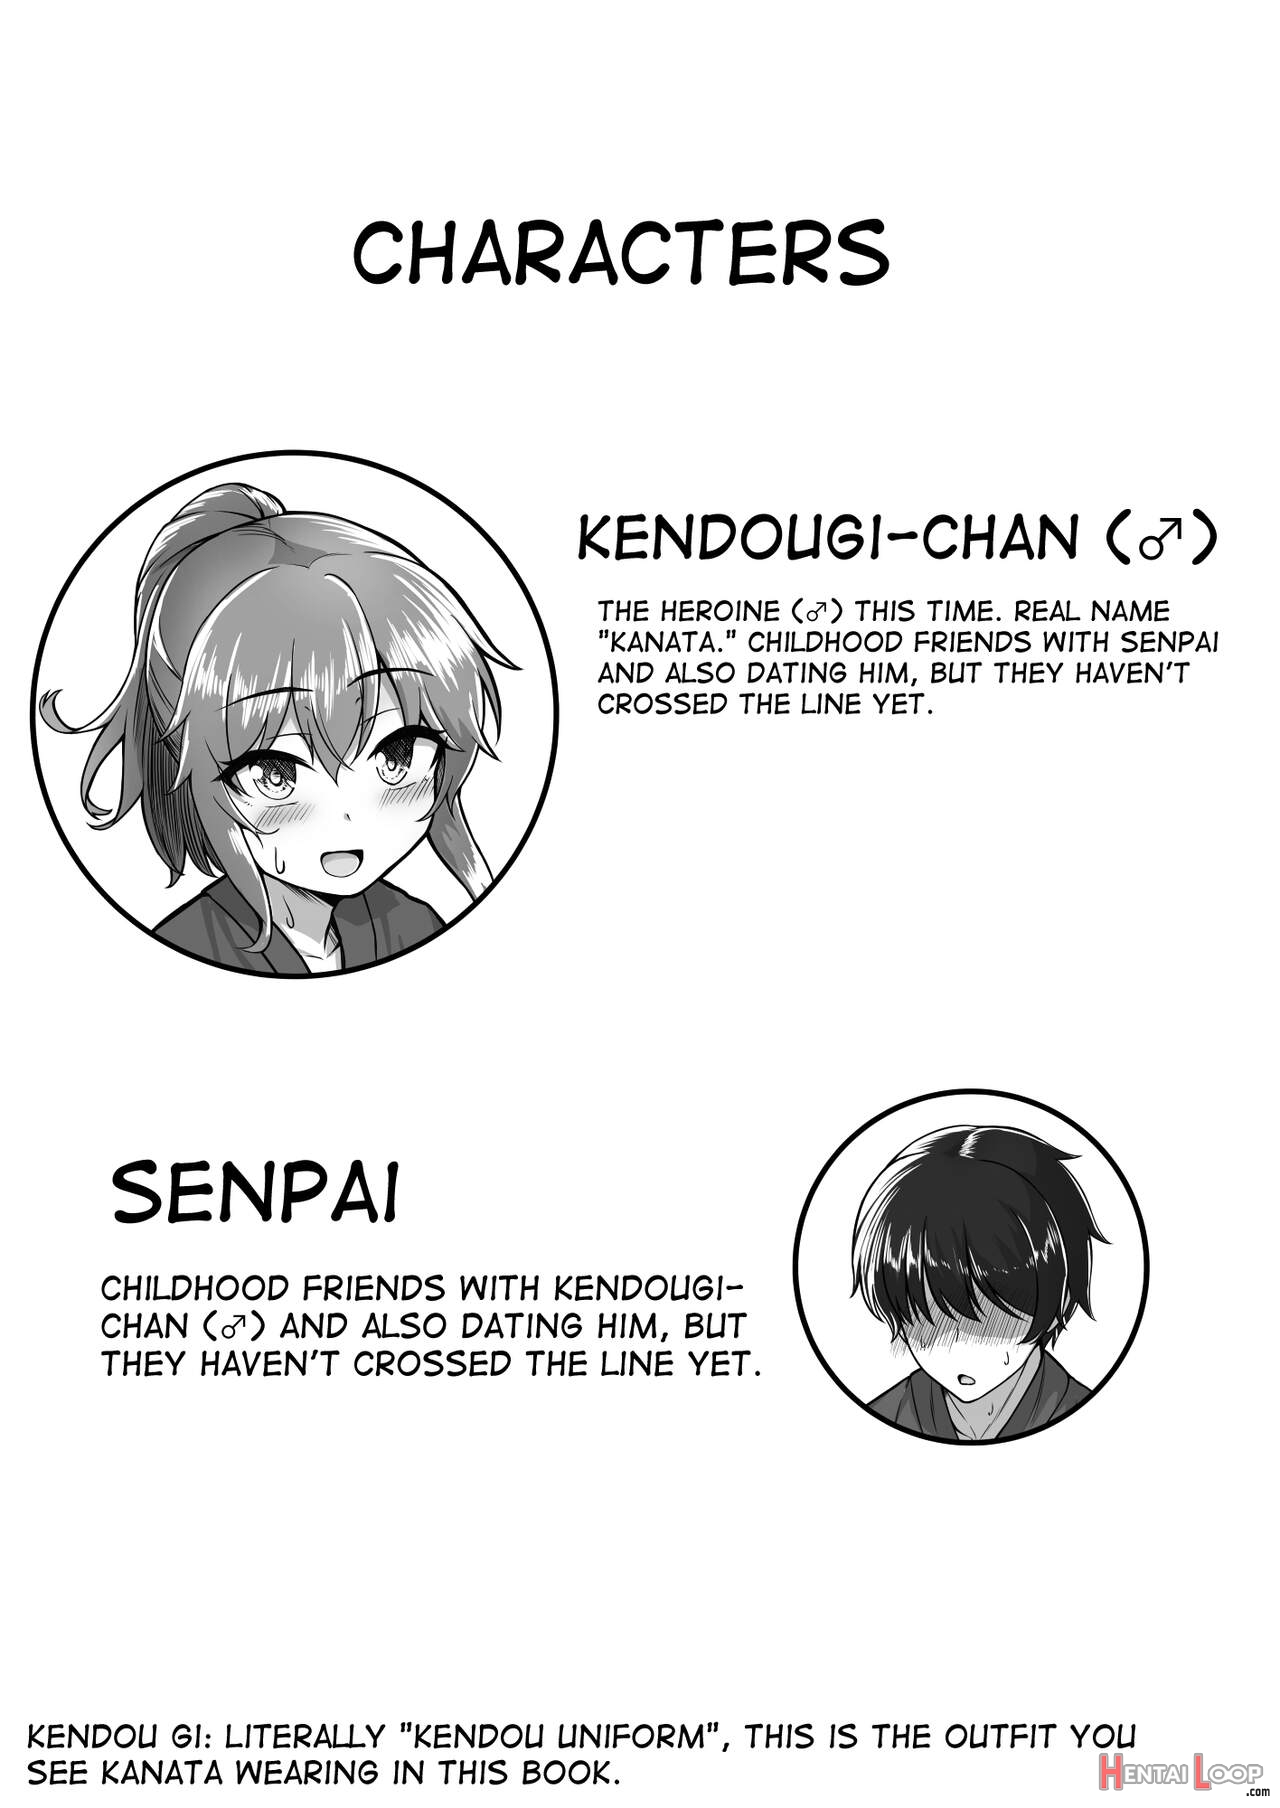 Kendougi-chan (♂) To. page 3